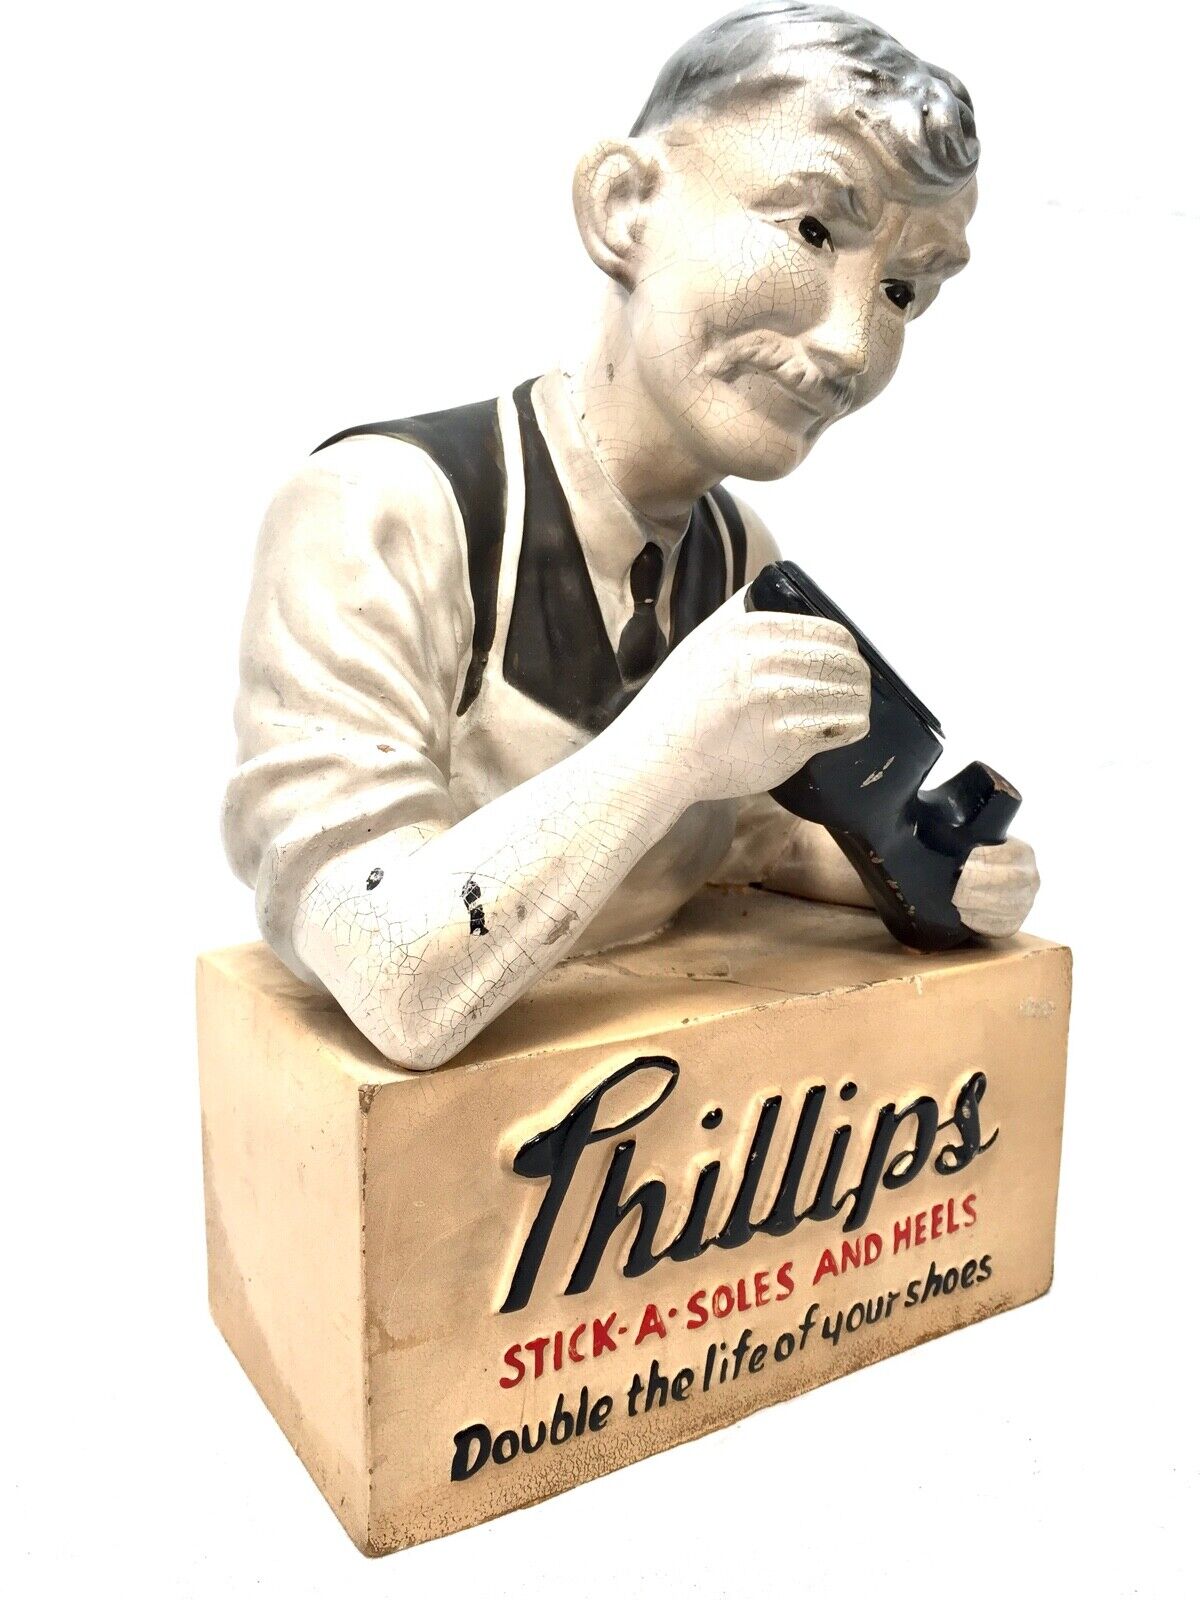 Antique Advertising - Phillips Stick a Soles & Heels Cobblers Shop Display Sign